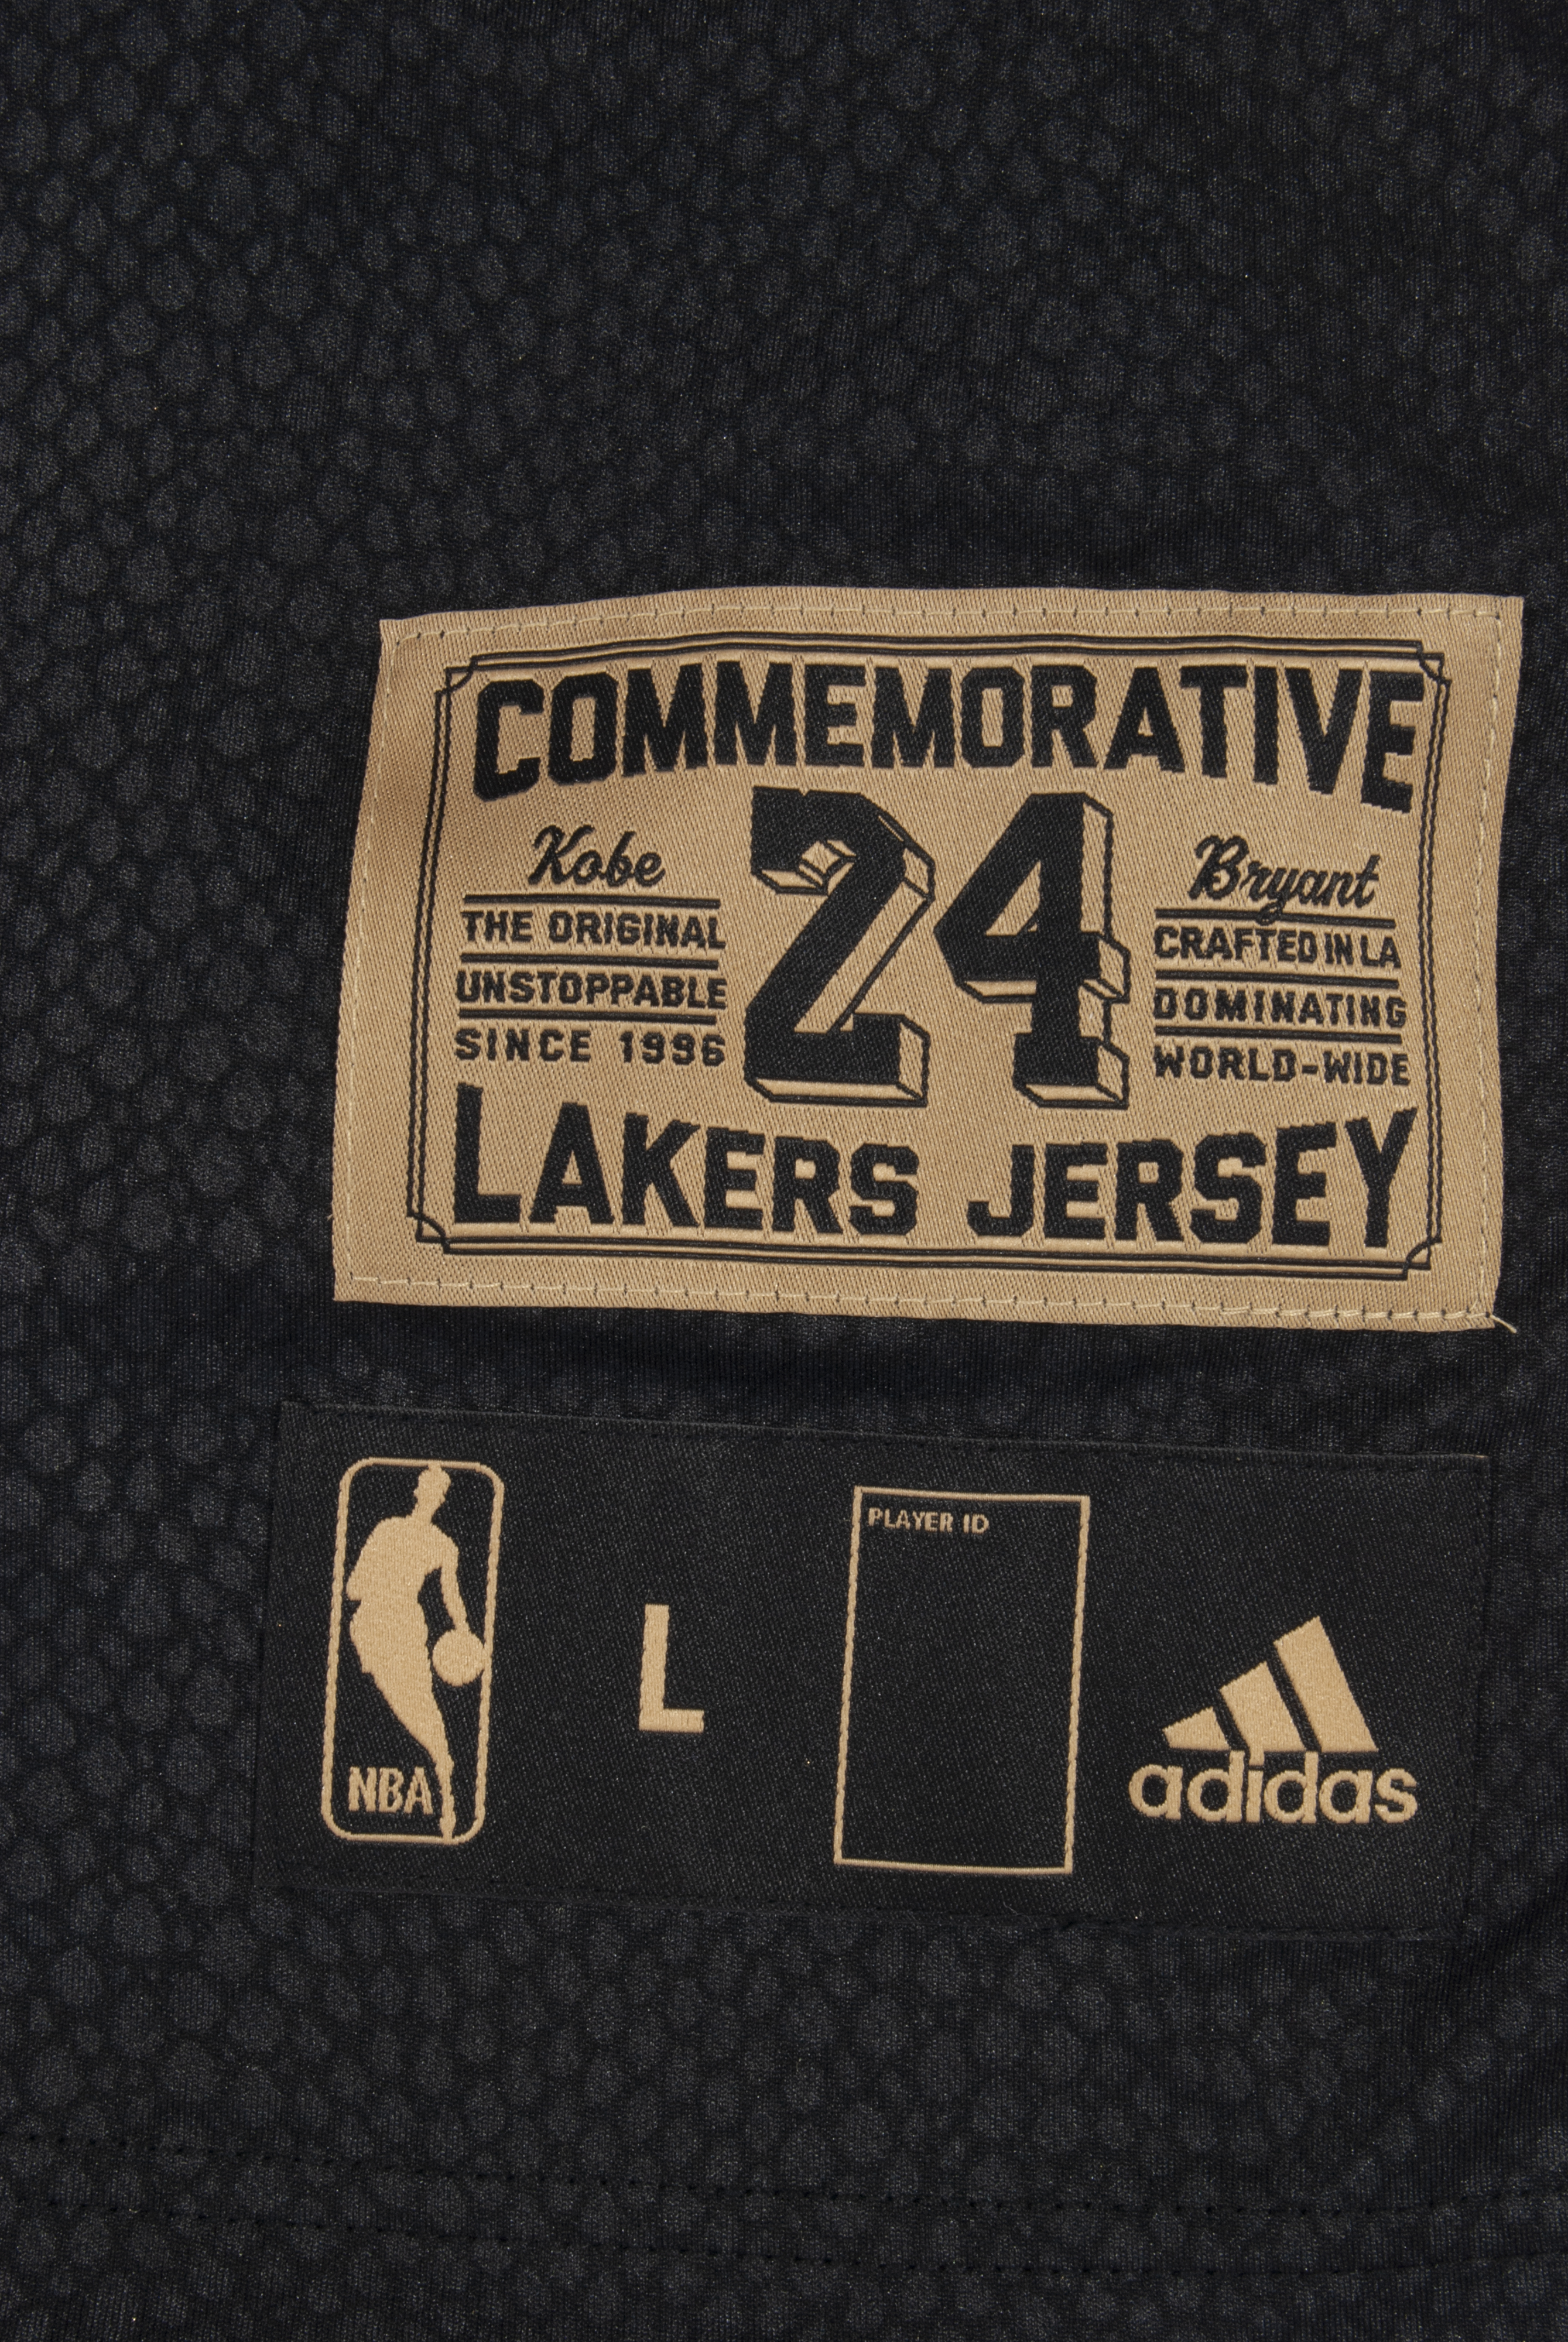 Does Anyone Know The History Behind Adidas' Commemorative Kobe